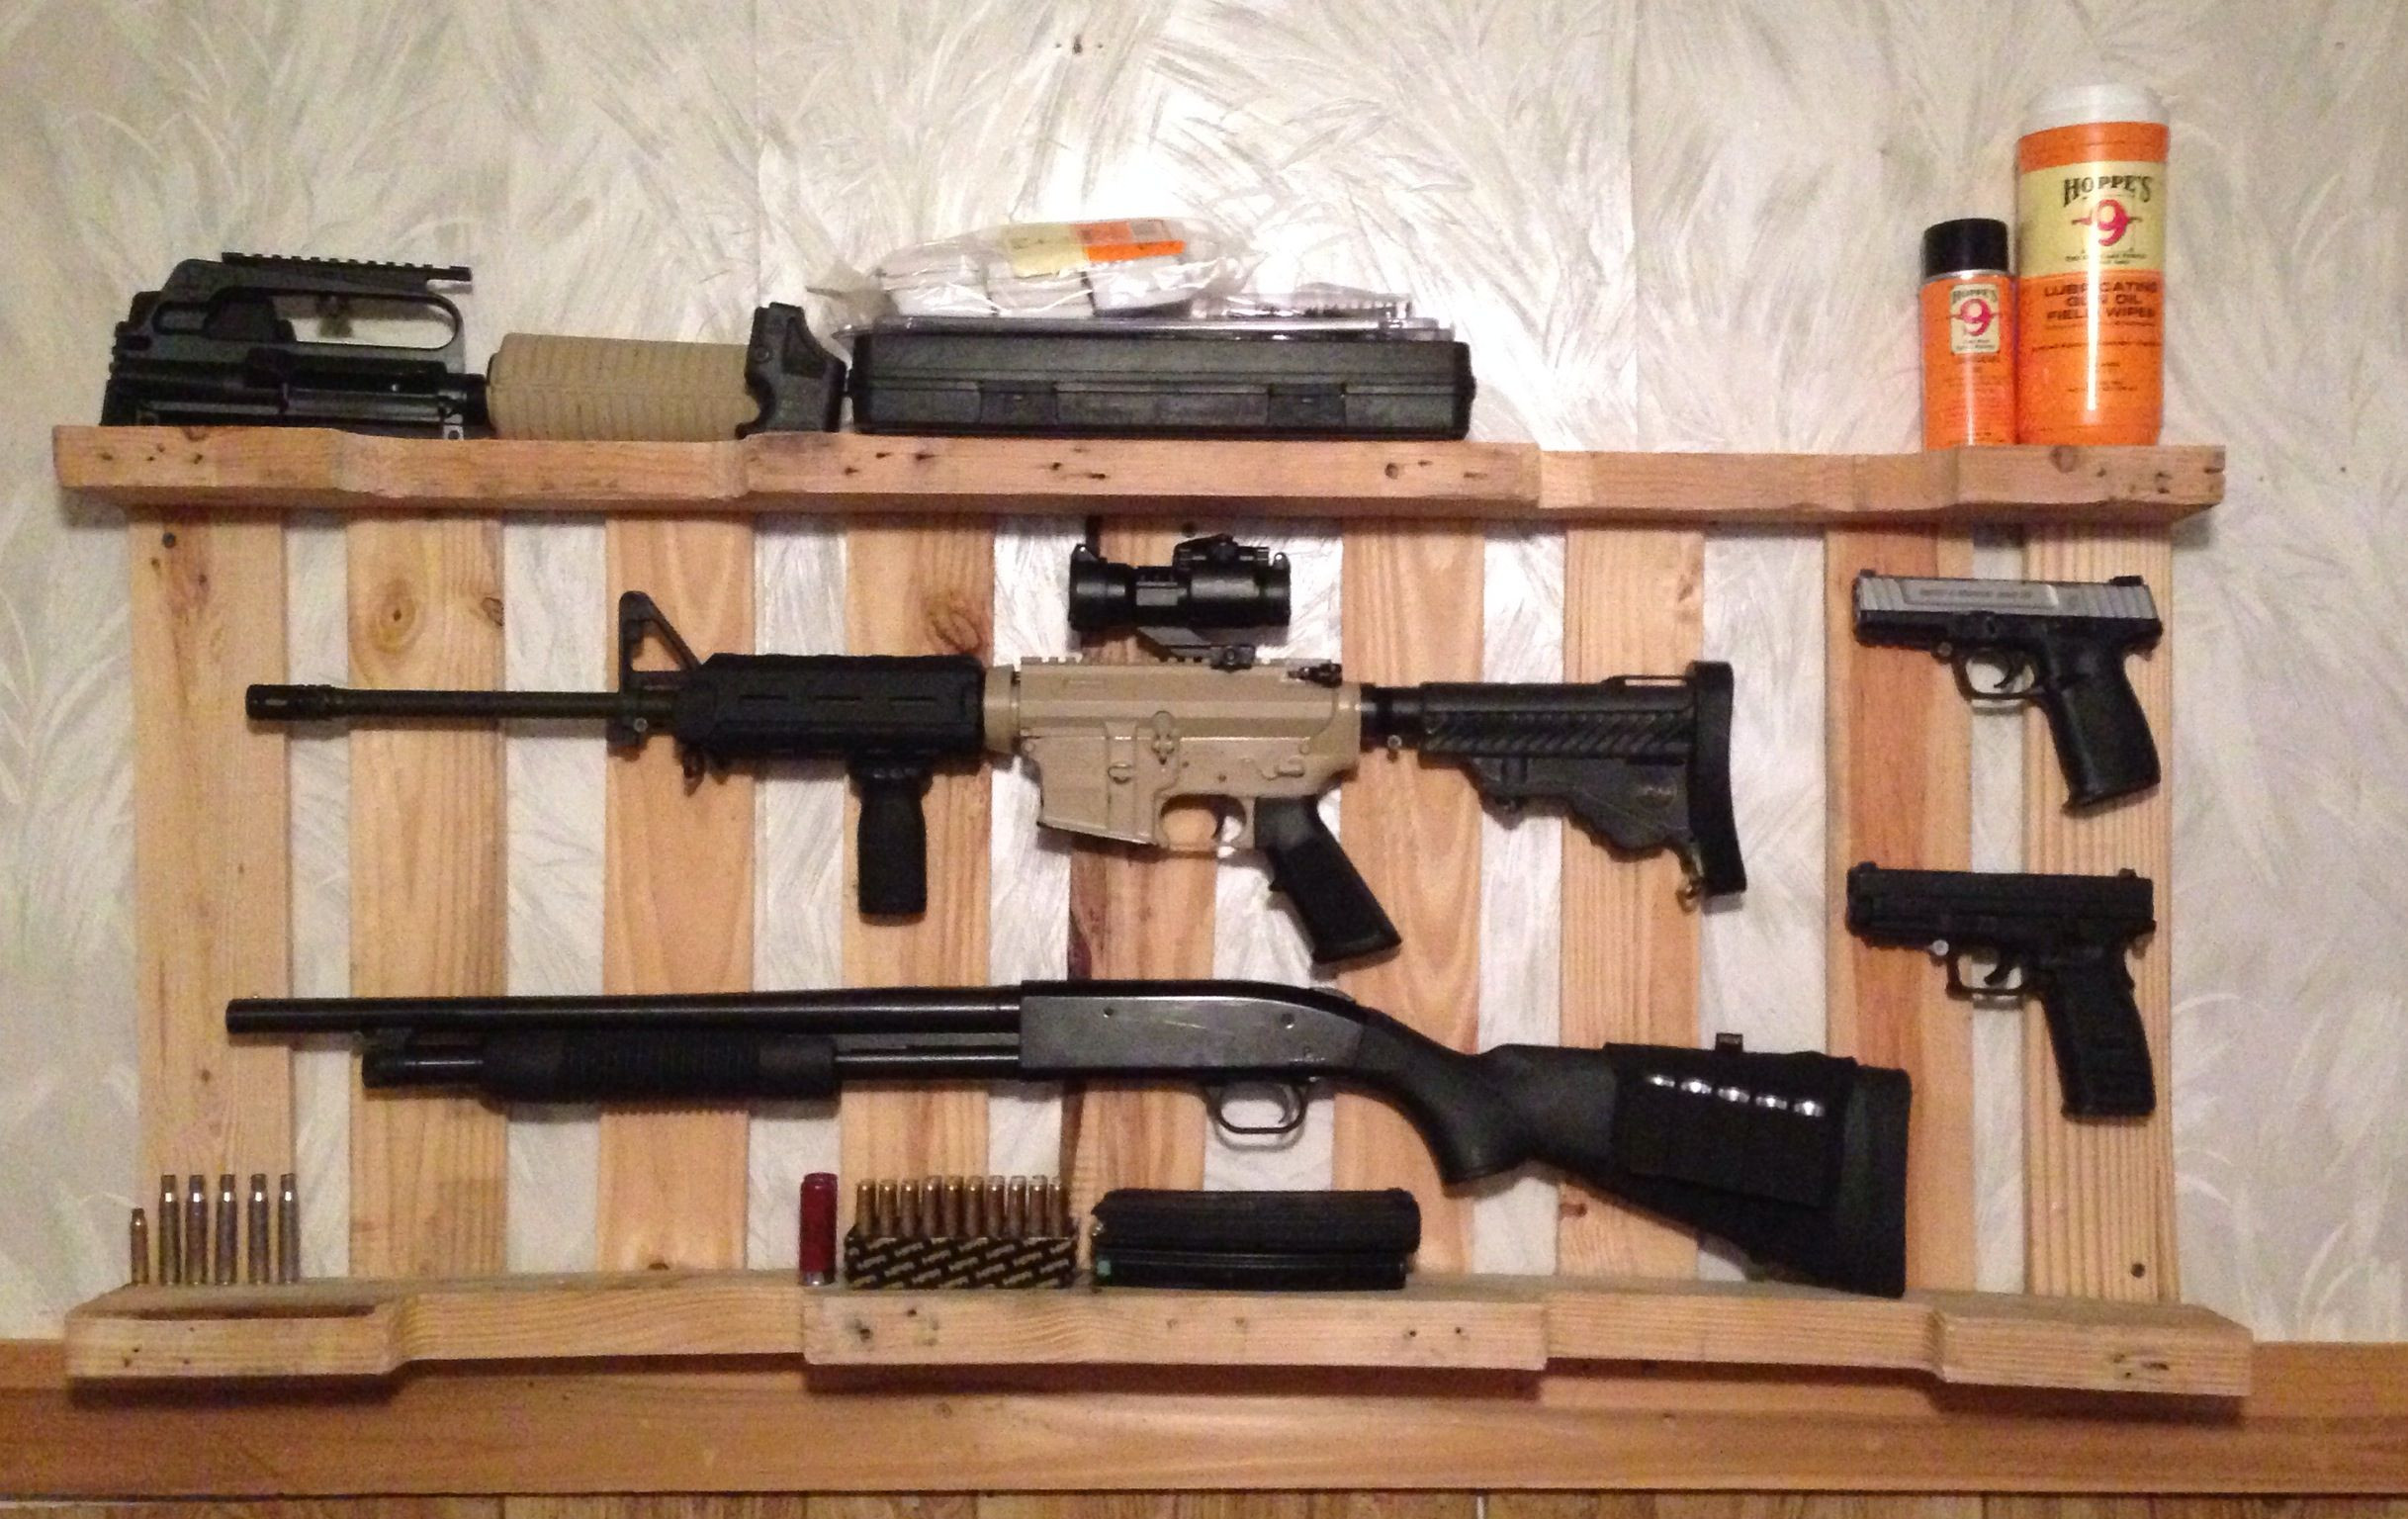 Best ideas about DIY Gun Rack
. Save or Pin DIY gun rack out of wooden pallet Now.